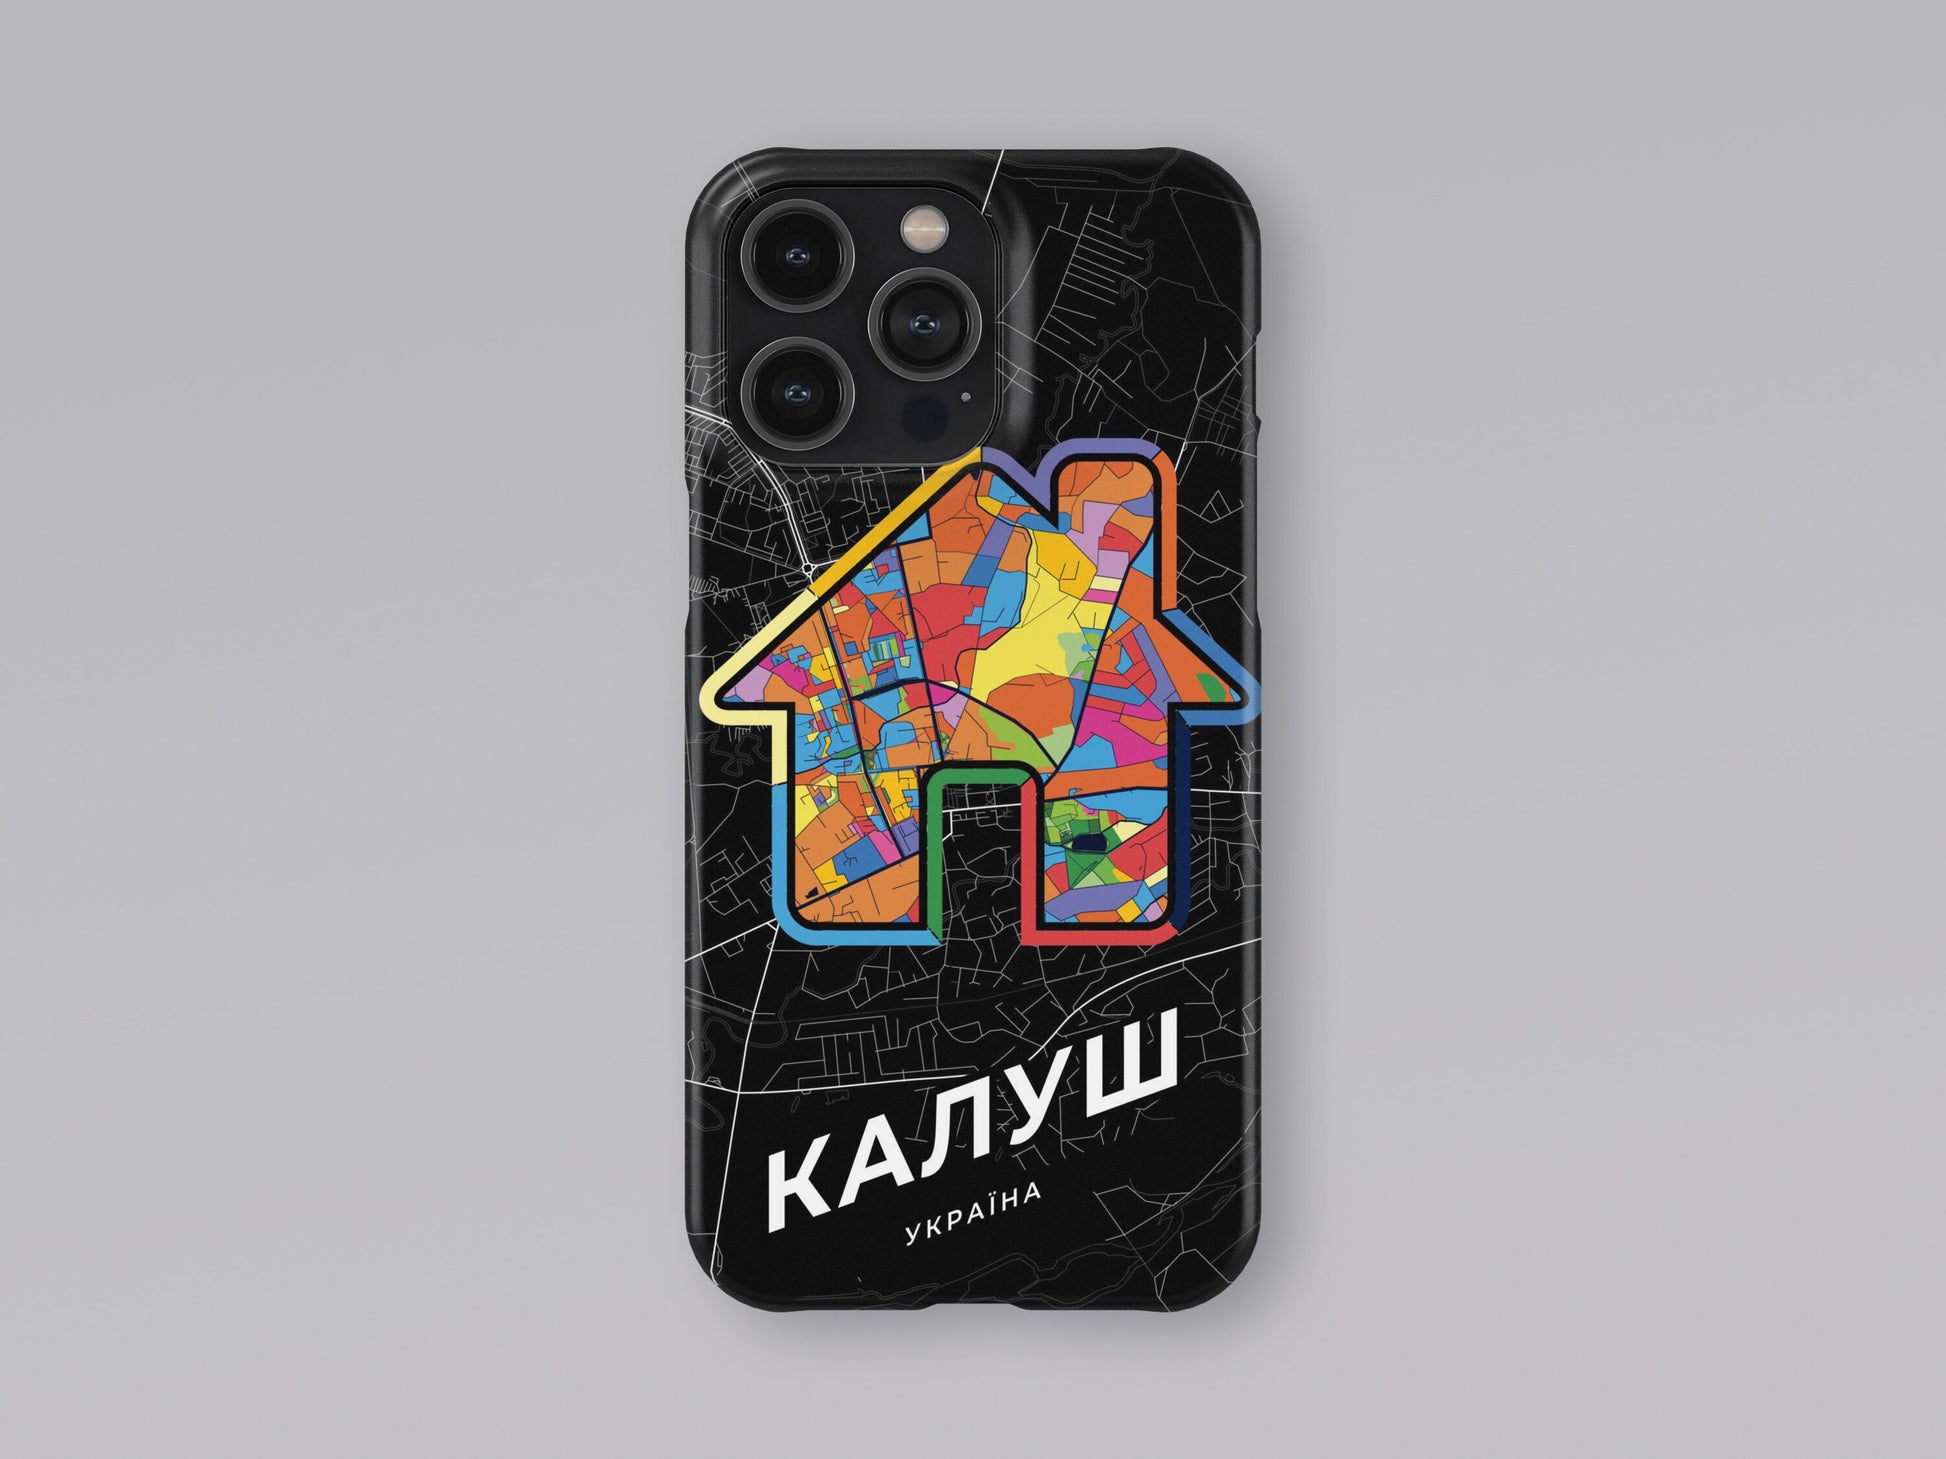 Kalush Ukraine slim phone case with colorful icon. Birthday, wedding or housewarming gift. Couple match cases. 3